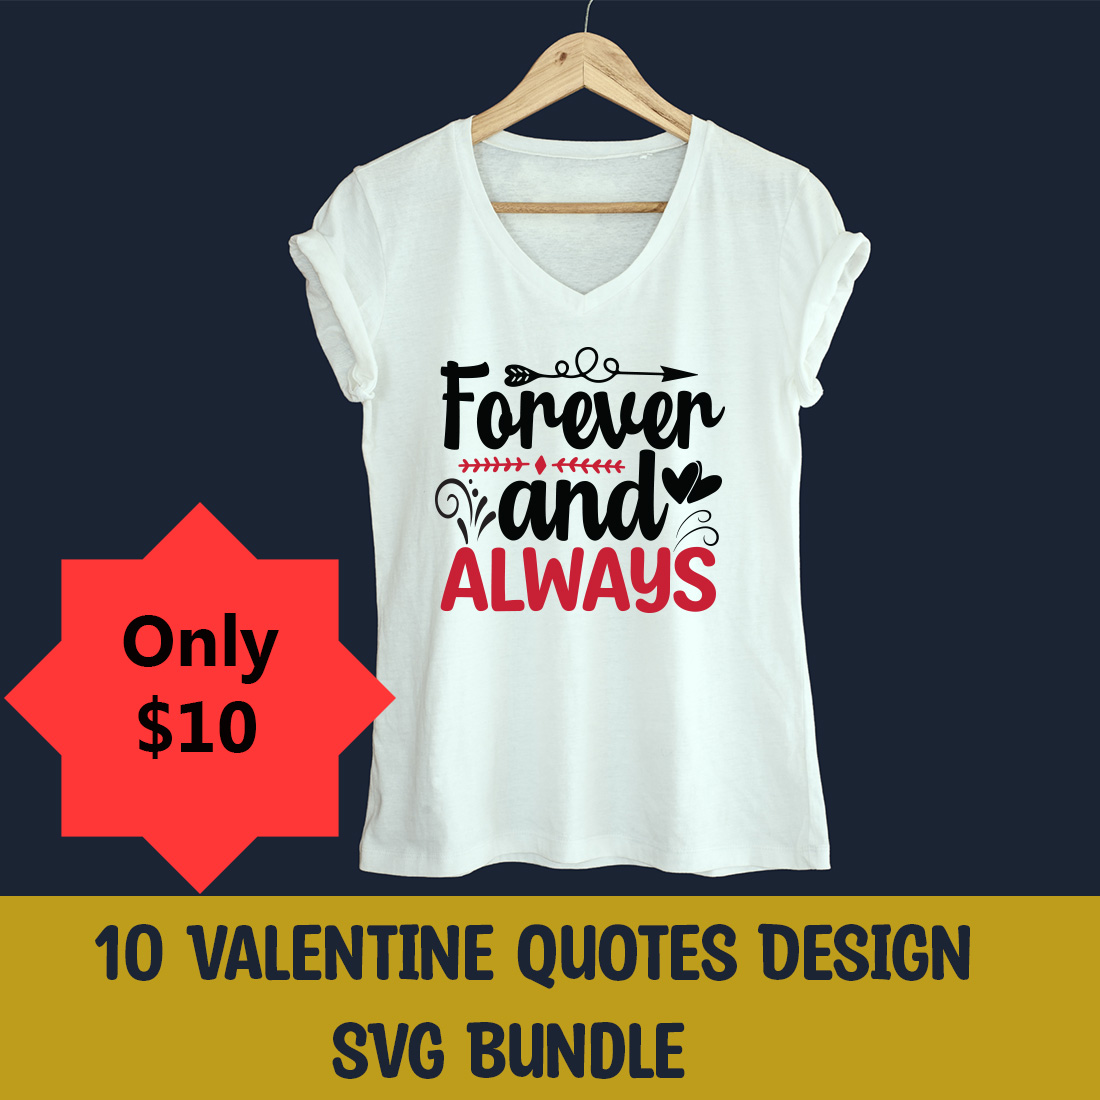 10 Valentine Quotes Design SVG Bundle cover image.